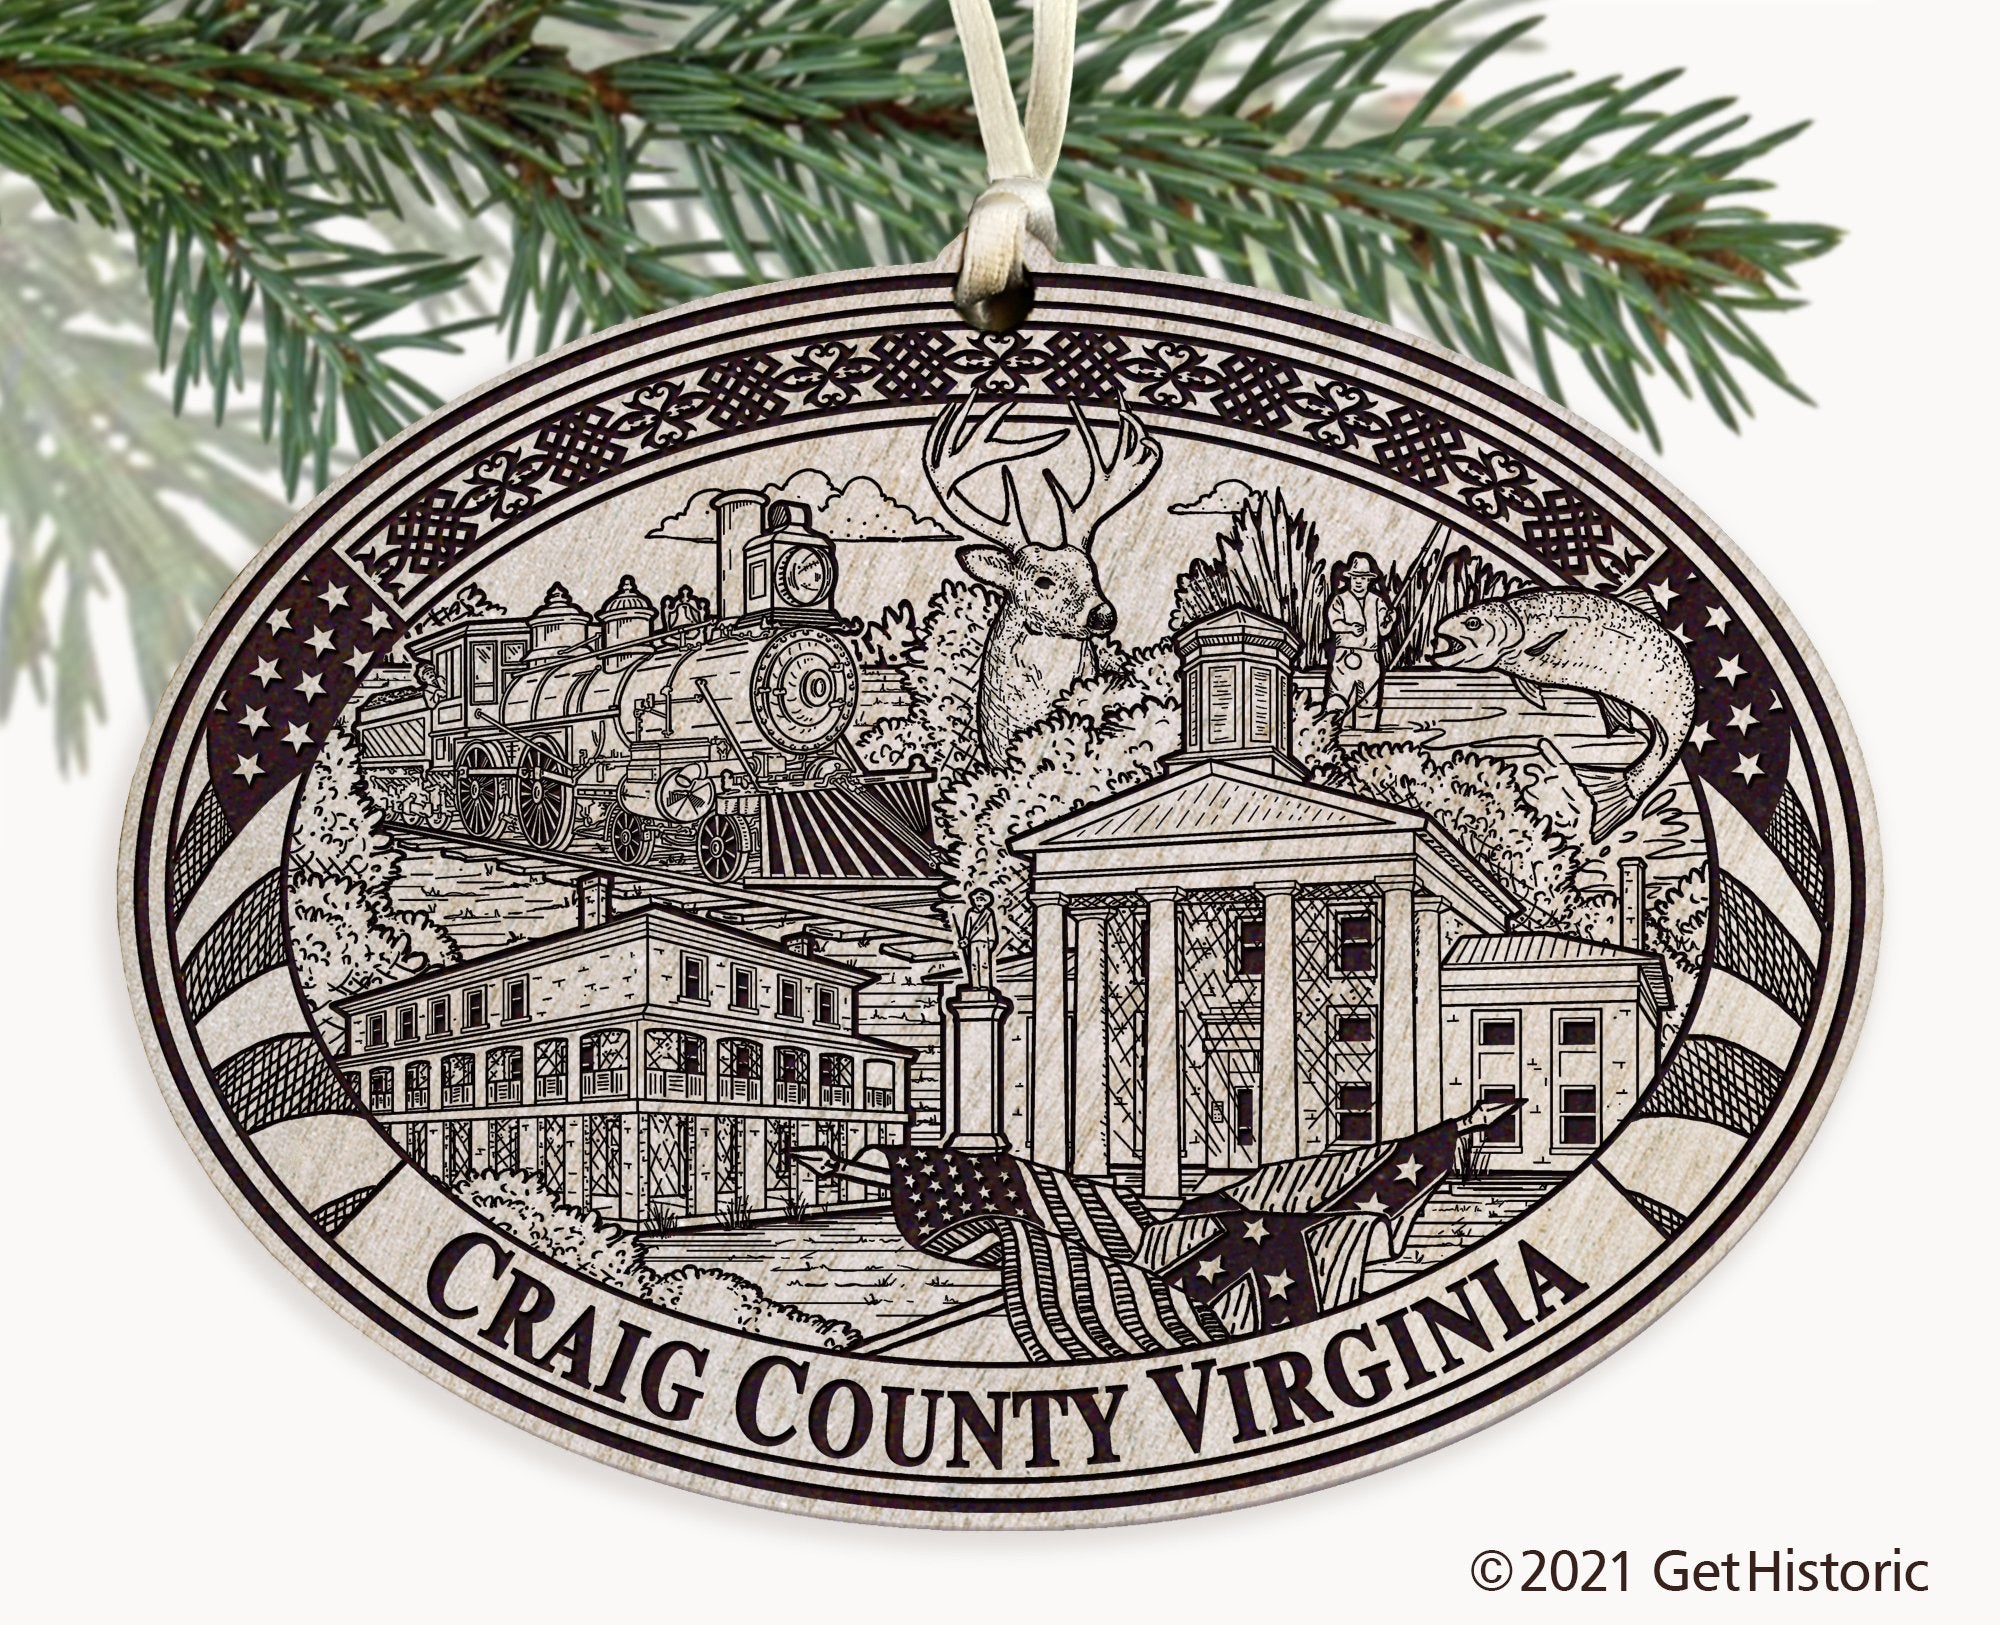 Craig County Virginia Engraved Ornament